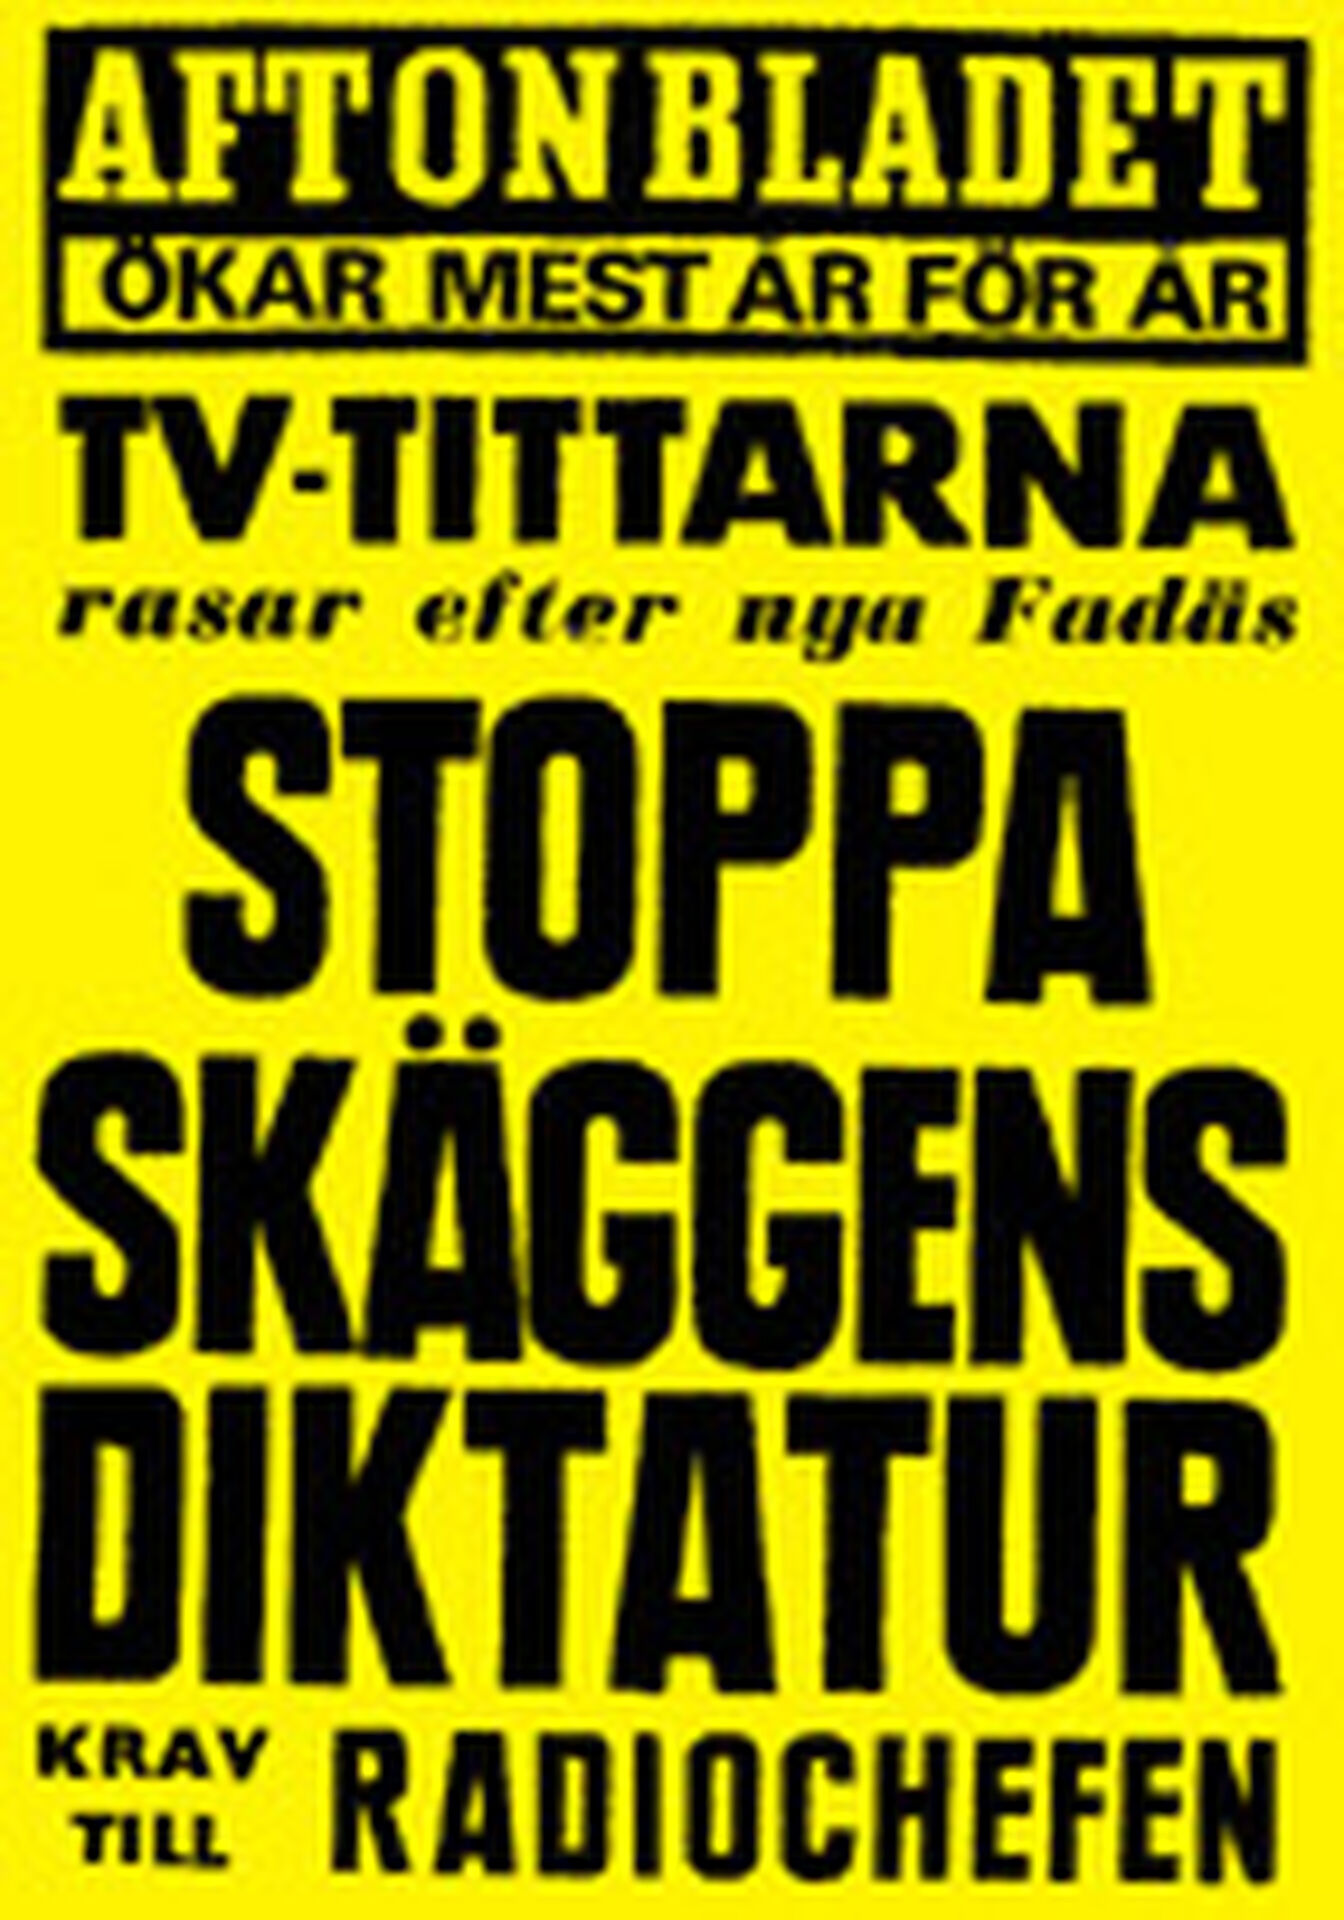 Newspaper Placard, featuring Yngve Gamlin's Skäggen